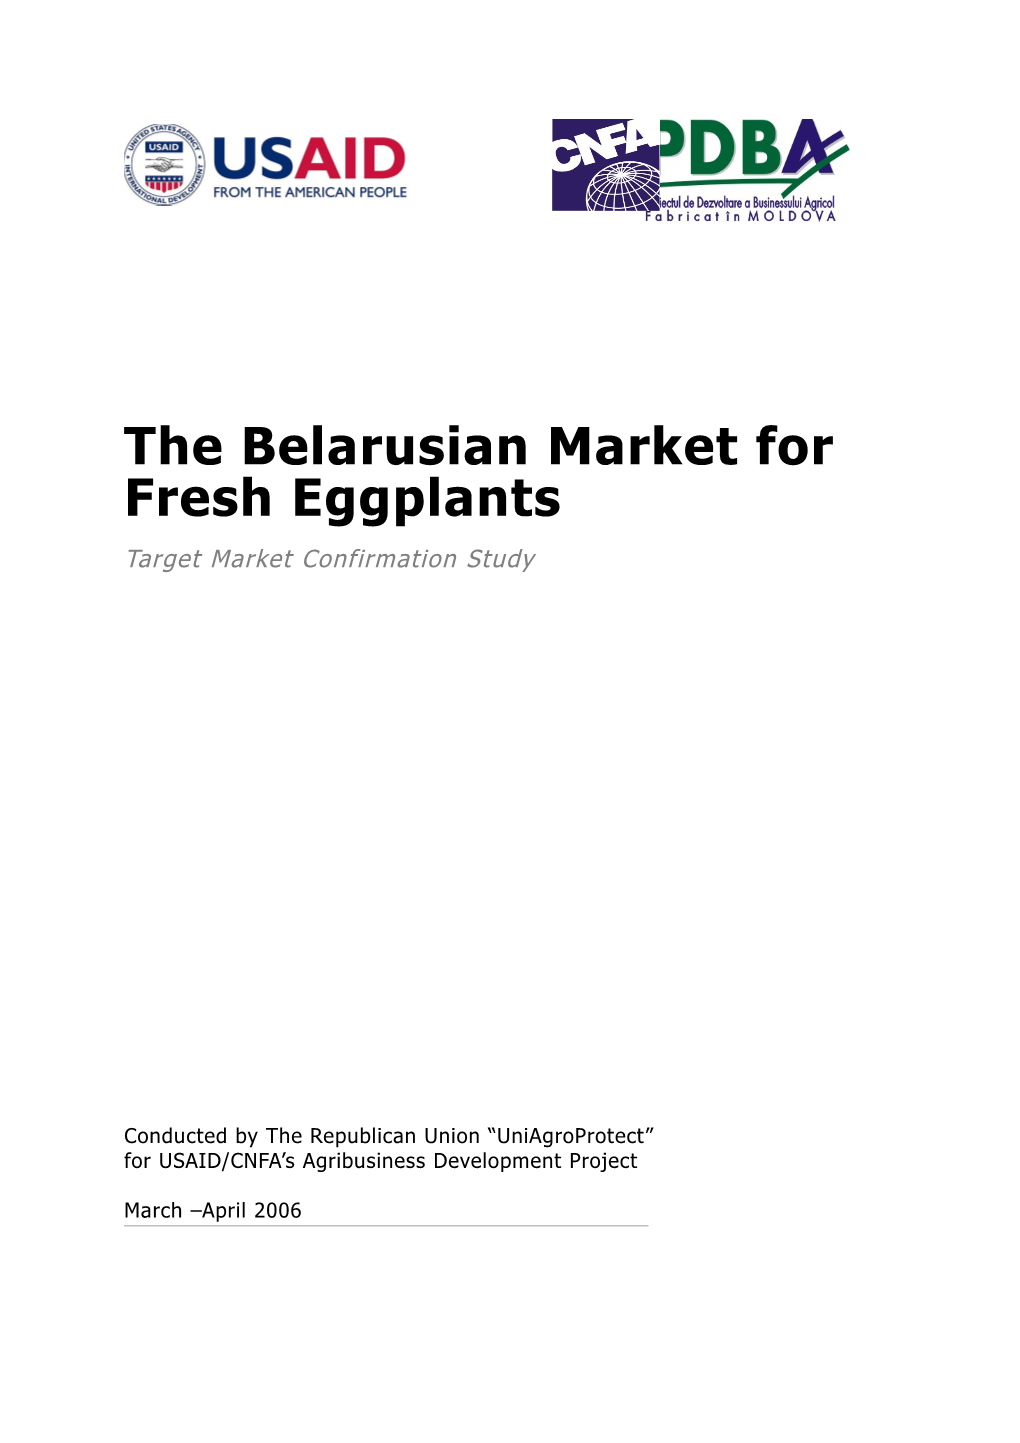 The Belarusian Market for Fresh Eggplants